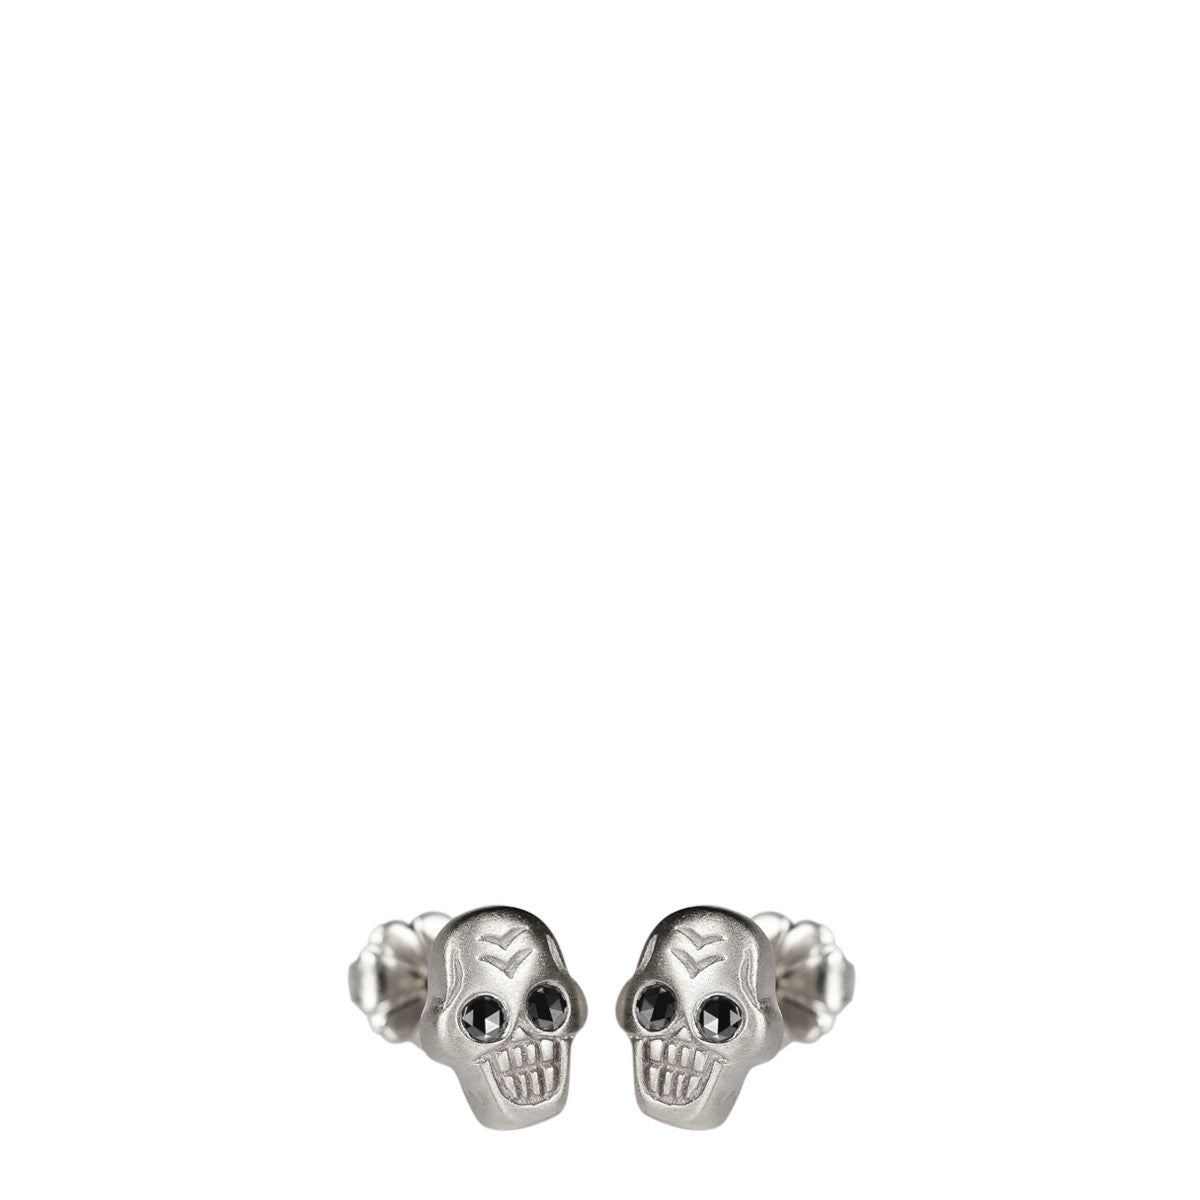 Sterling Silver Tiny Skull Stud Earrings with Black Diamond Eyes